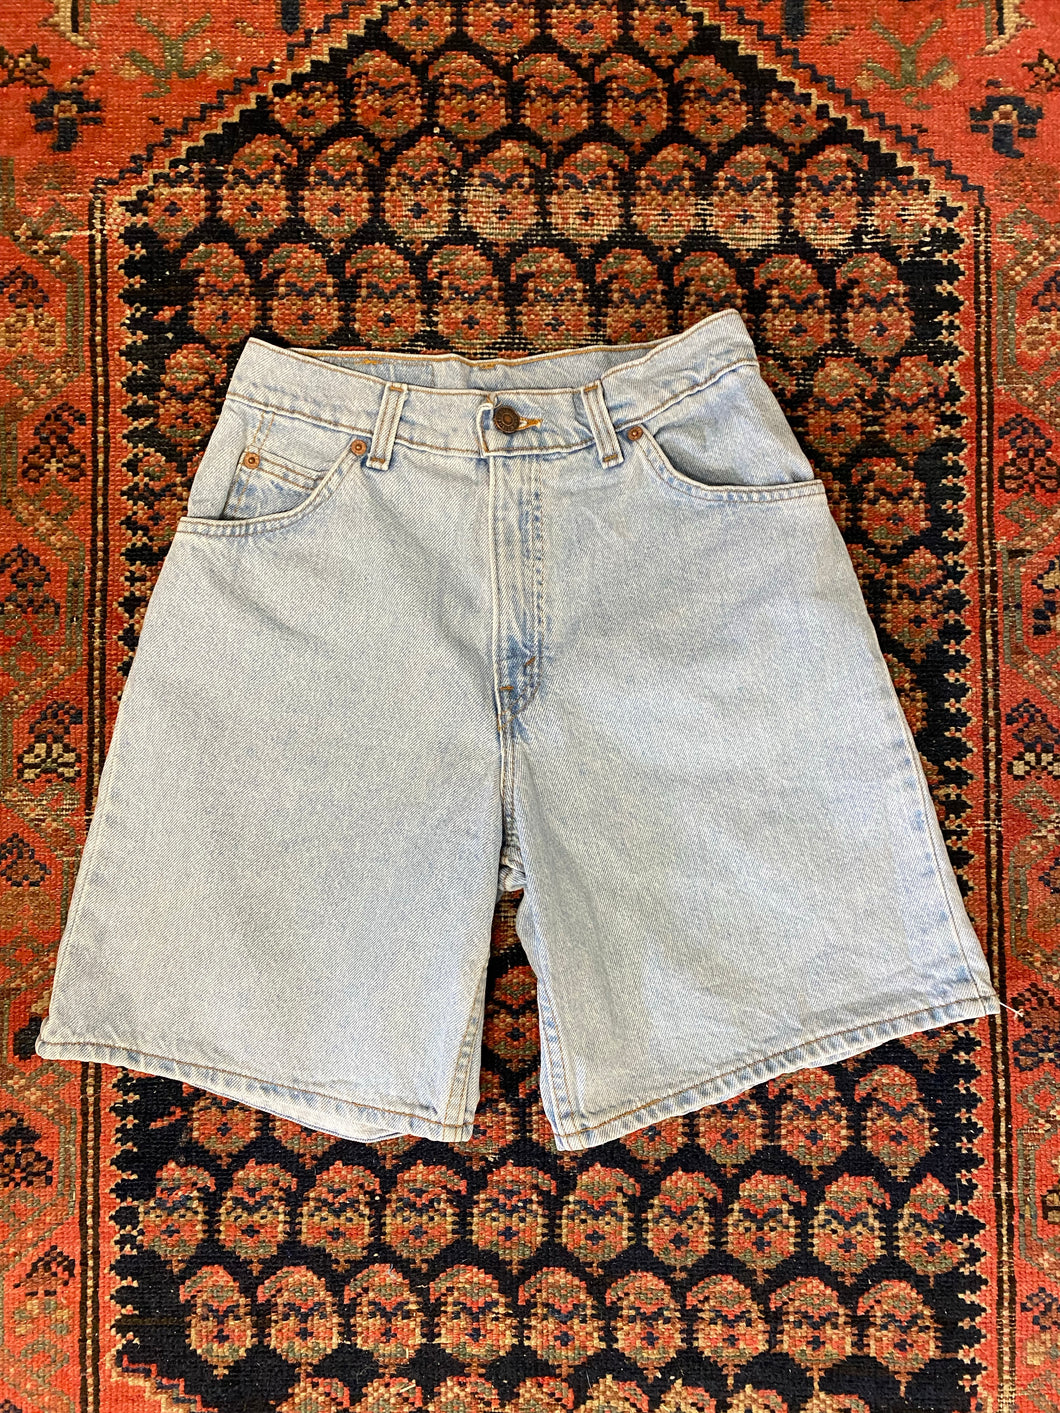 Vintage High Waisted Oranger Tab Levis Denim Shorts - 27in